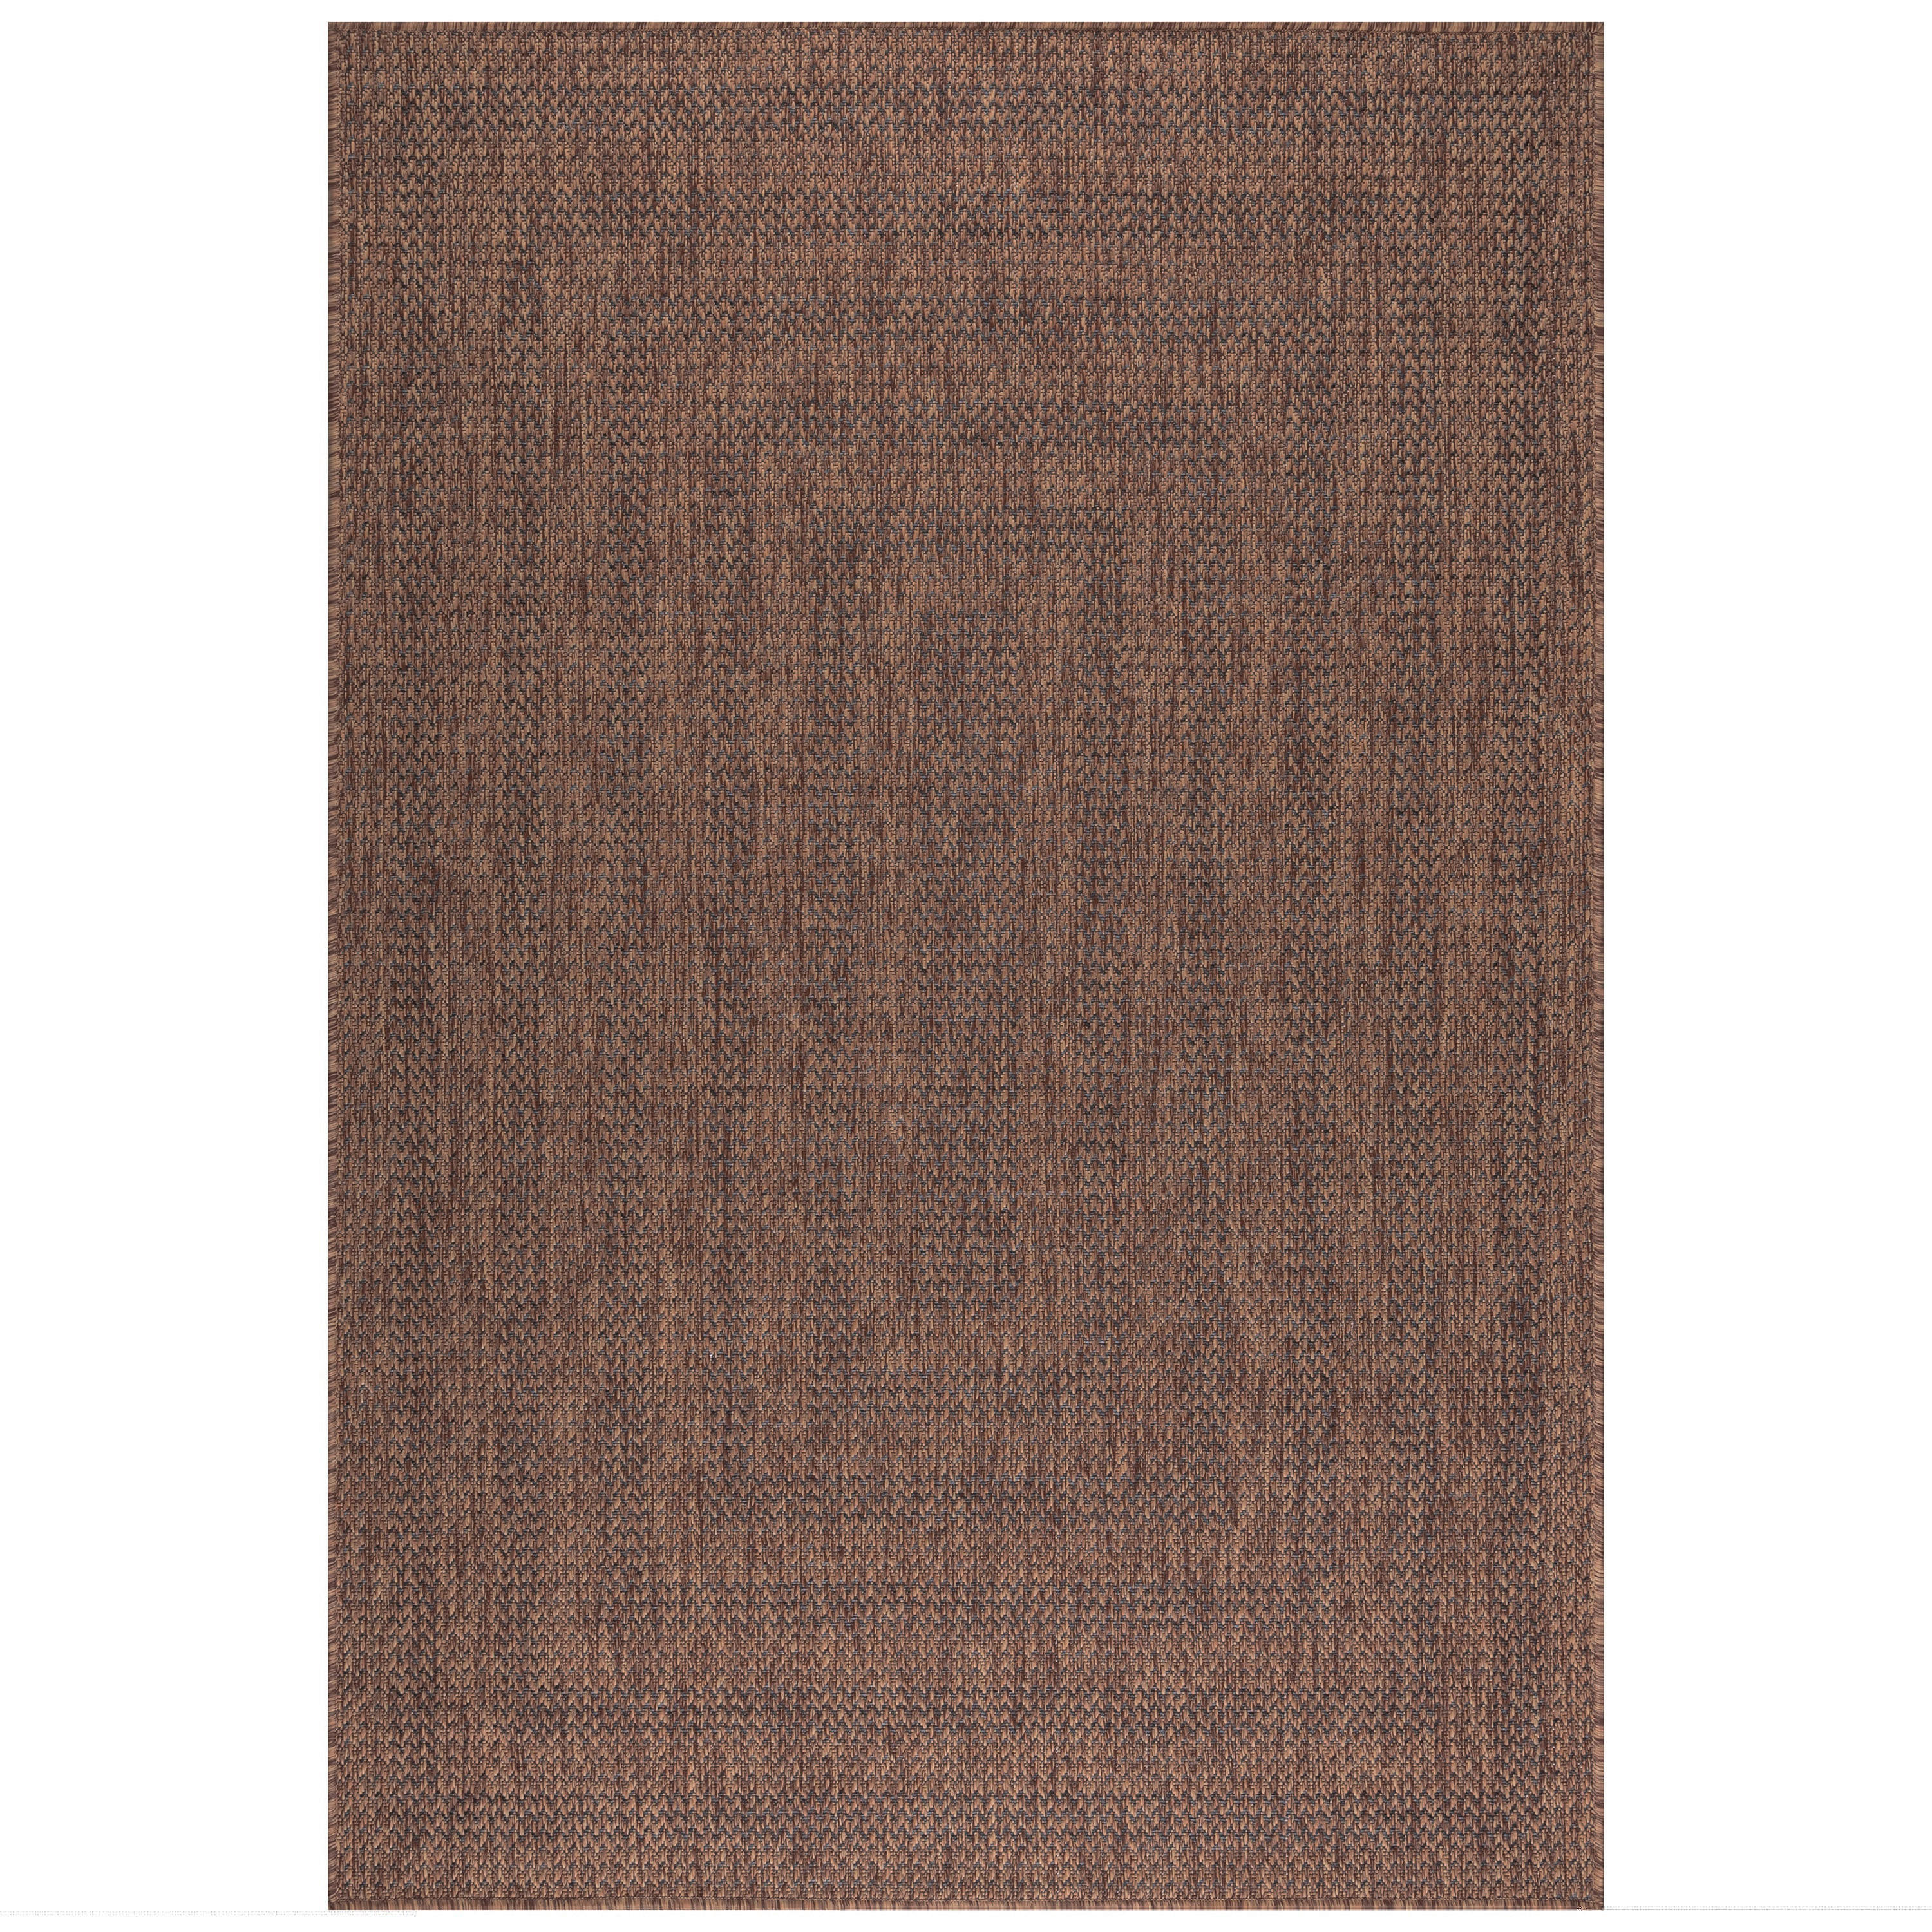 OUTDOORTEPPICH 80/150 cm Zagora  - Braun/Grau, Basics, Textil (80/150cm) - Novel